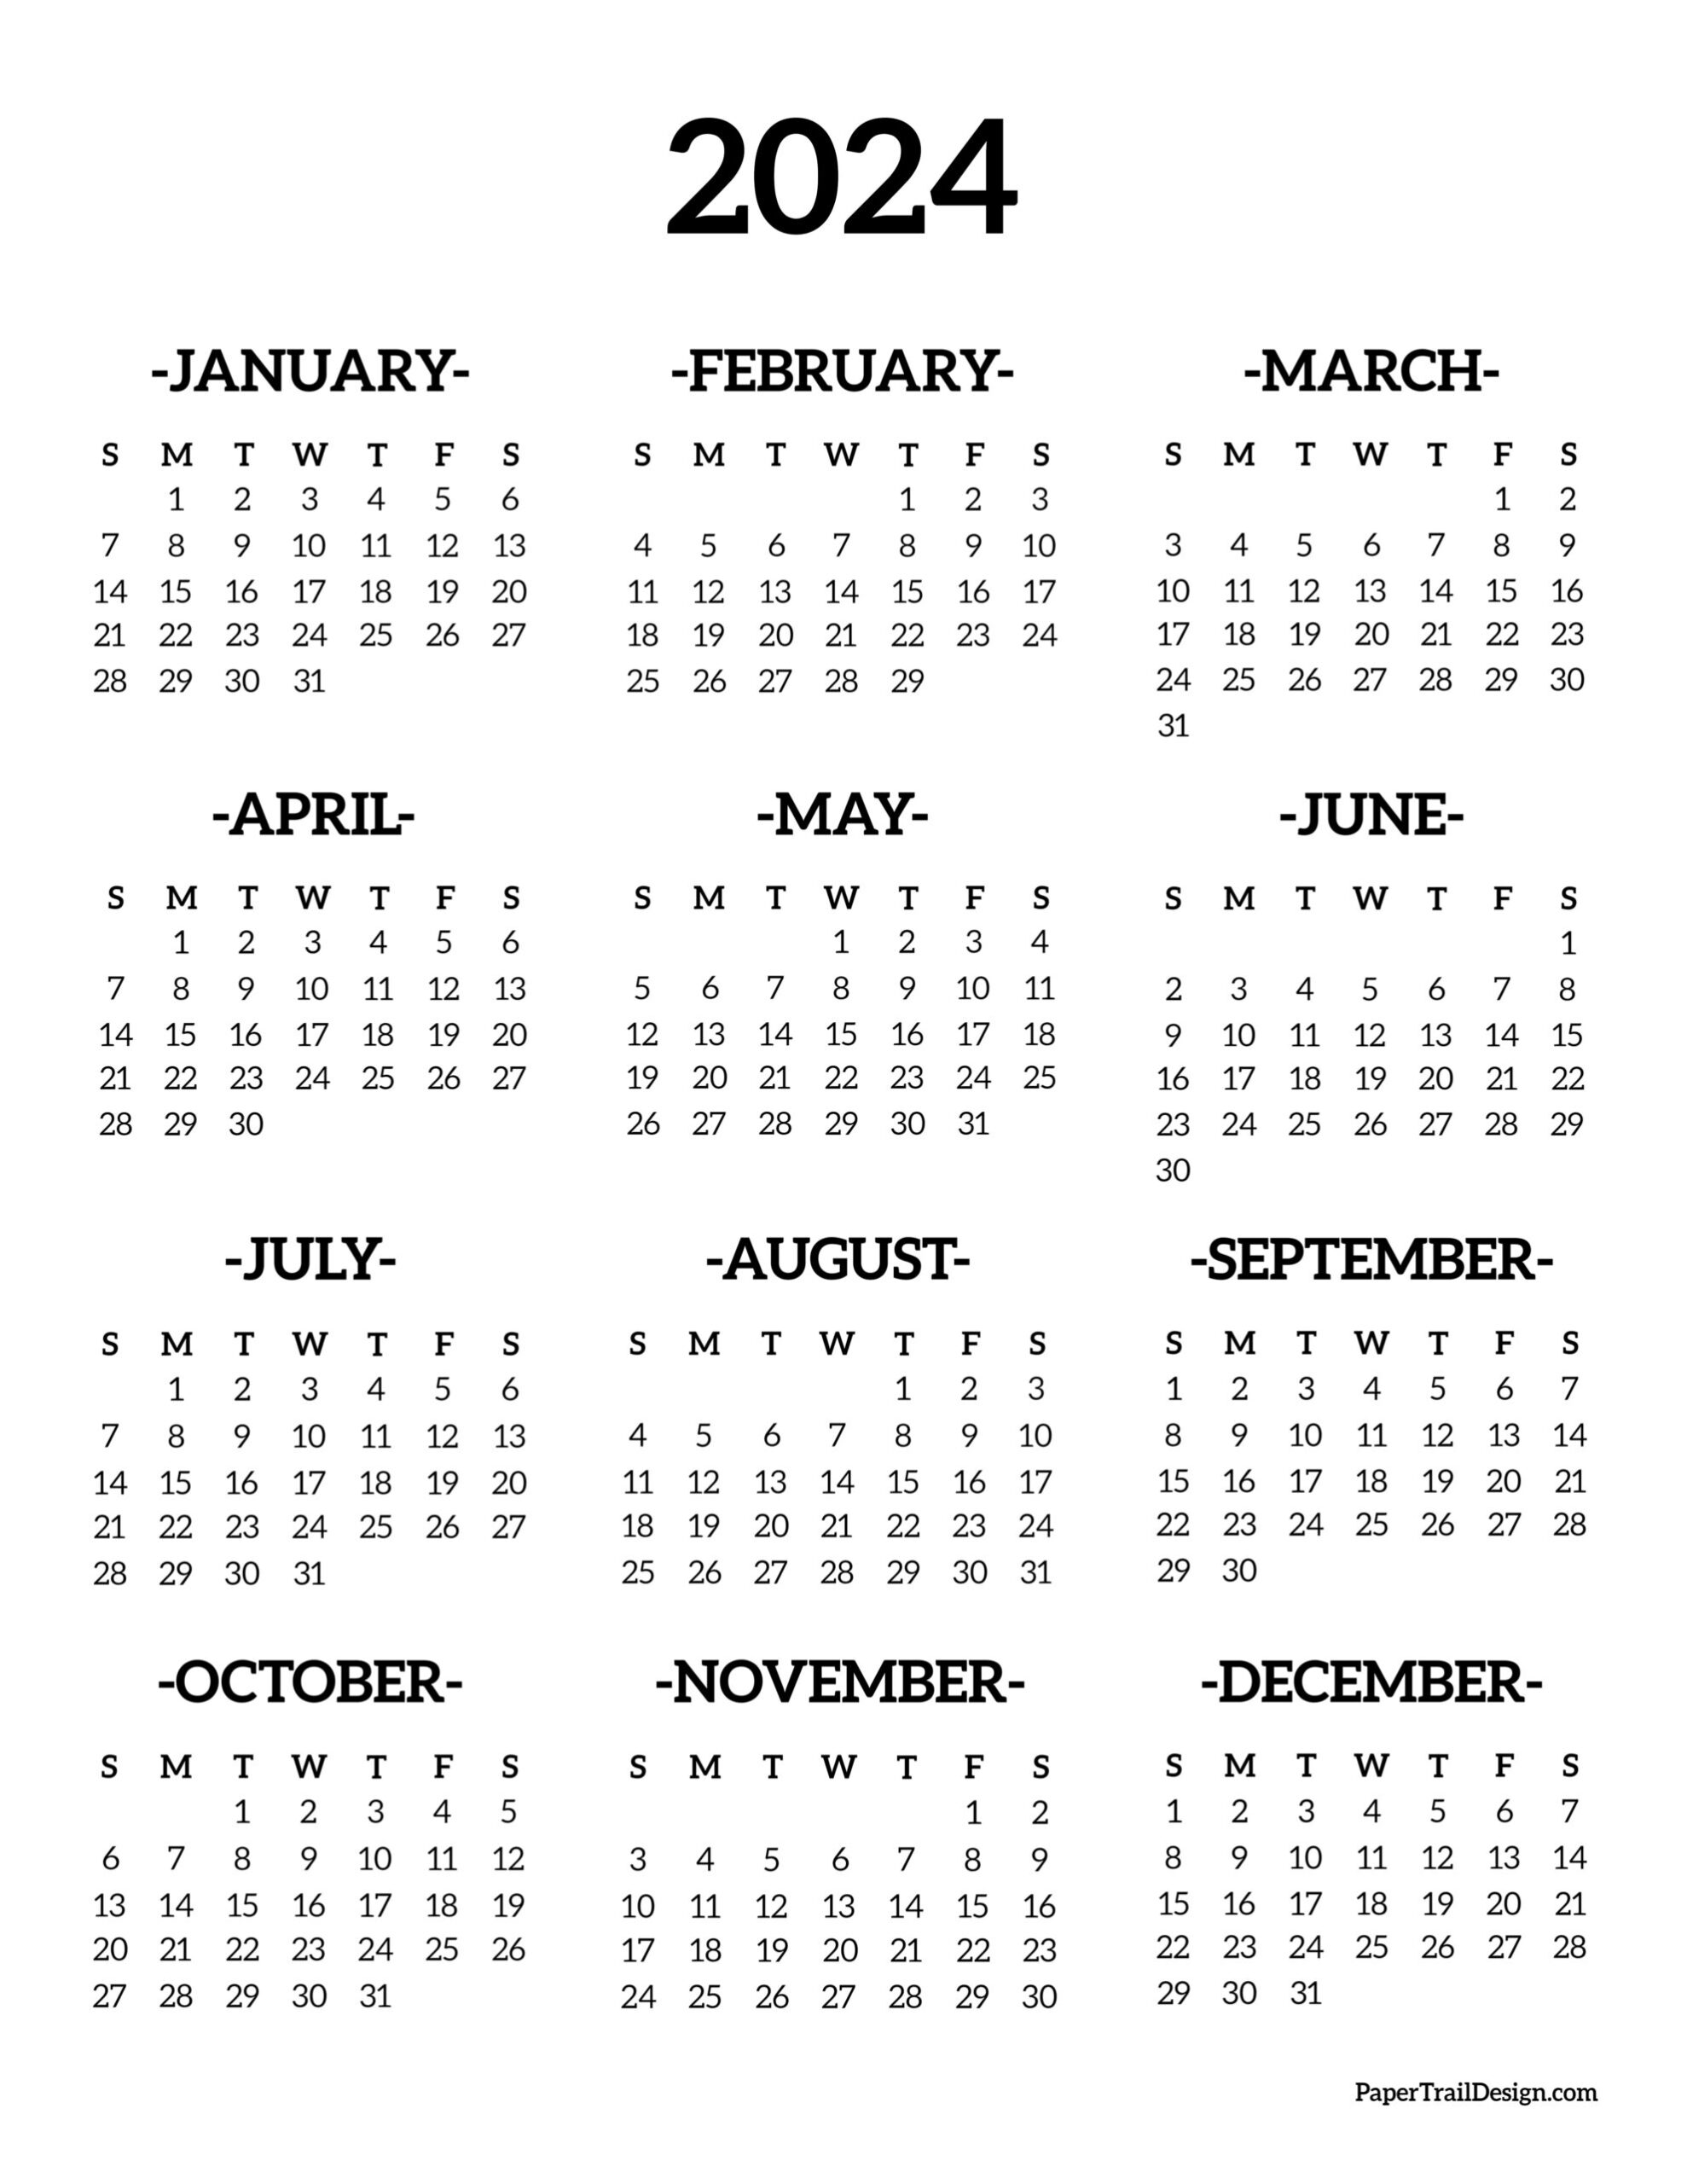 Calendar 2024 Printable One Page - Paper Trail Design for Calendar 2024 Printable Template